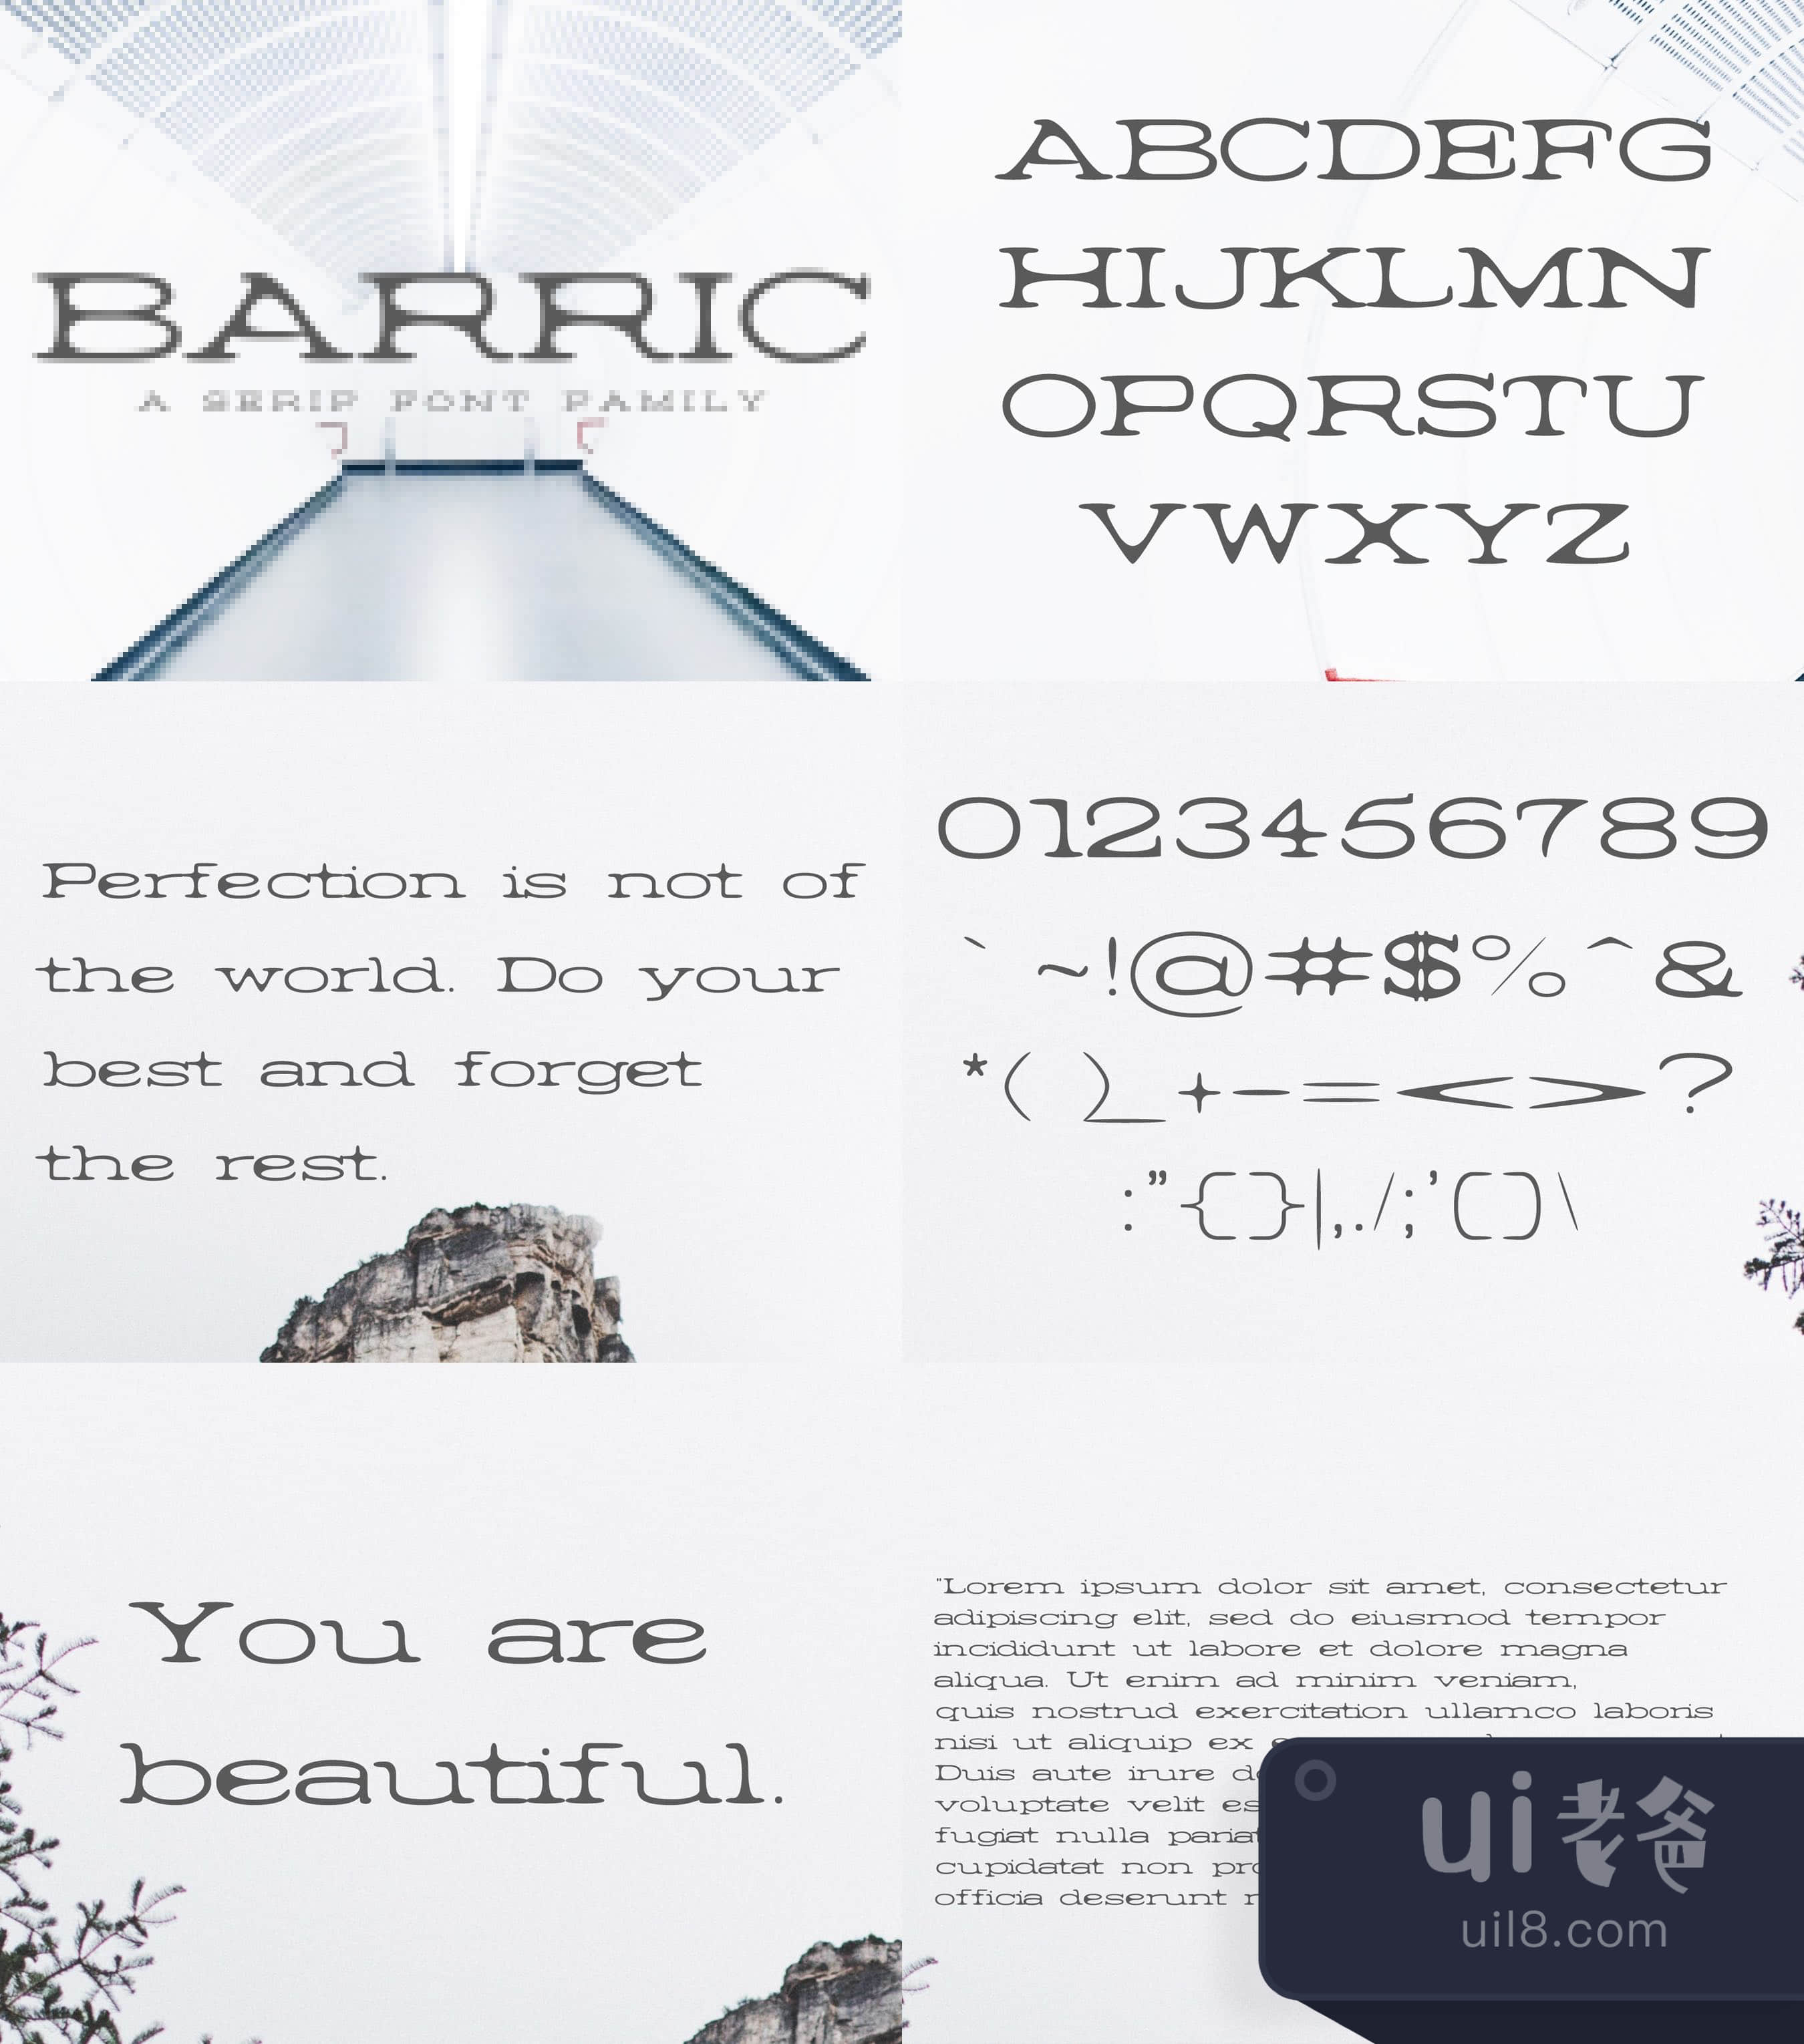 Barric A Serif字体家族 (Barric A Serif Font Family)插图